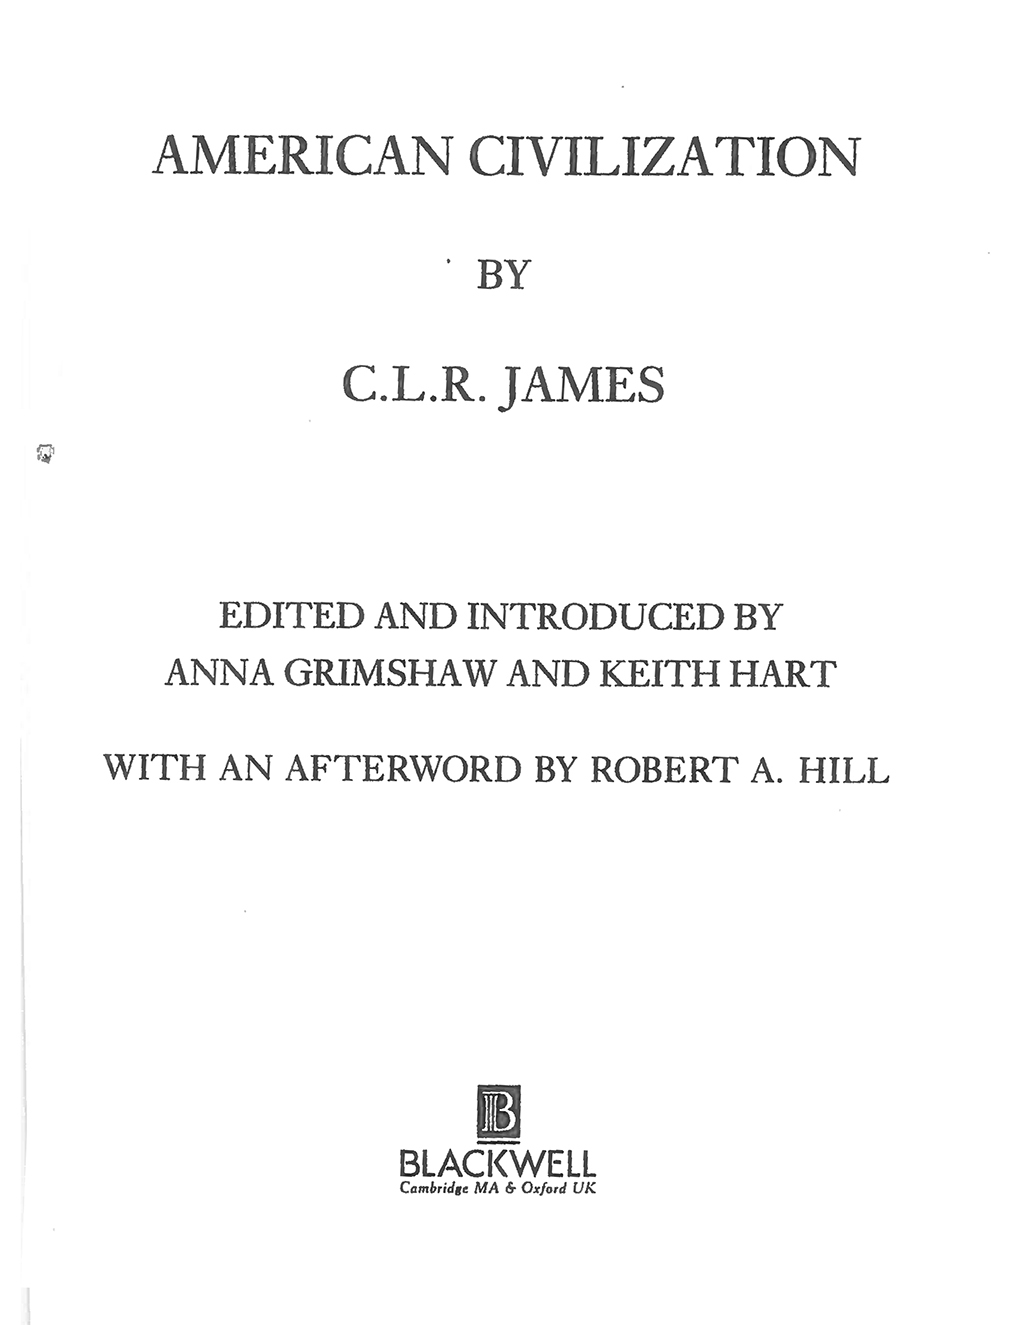 CLR James on Abolitionism